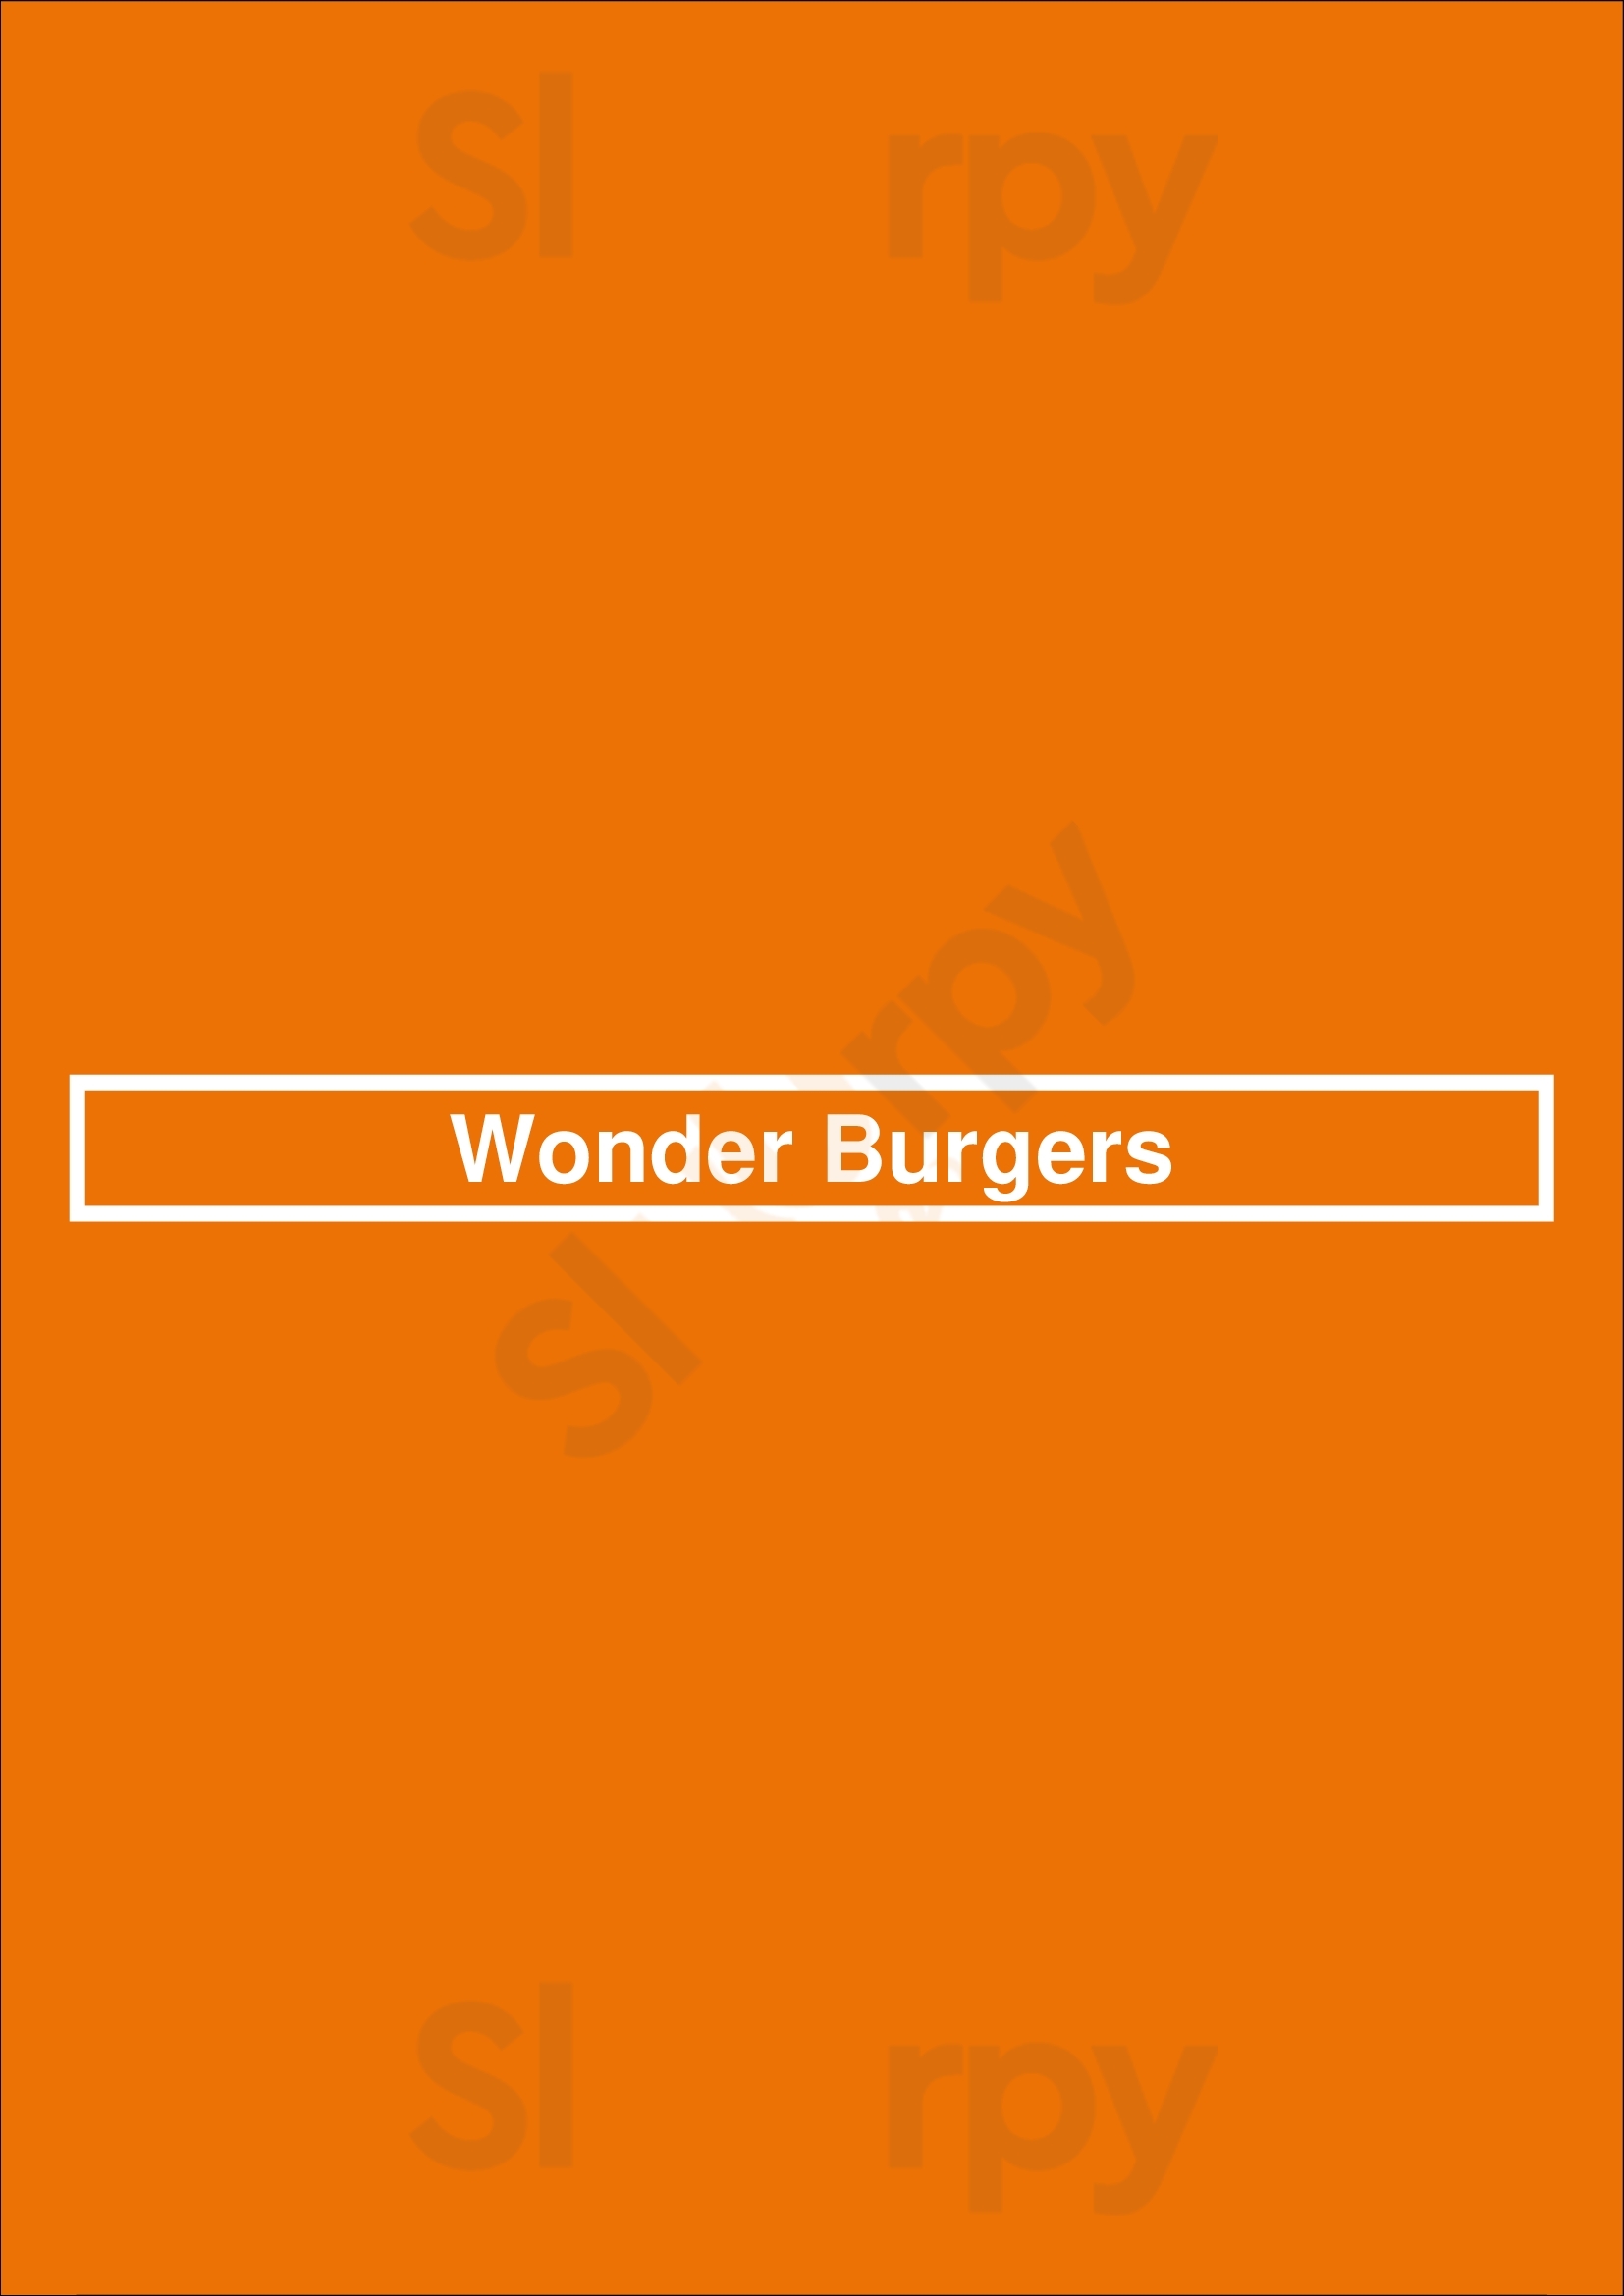 Wonder Burgers Pasadena Menu - 1